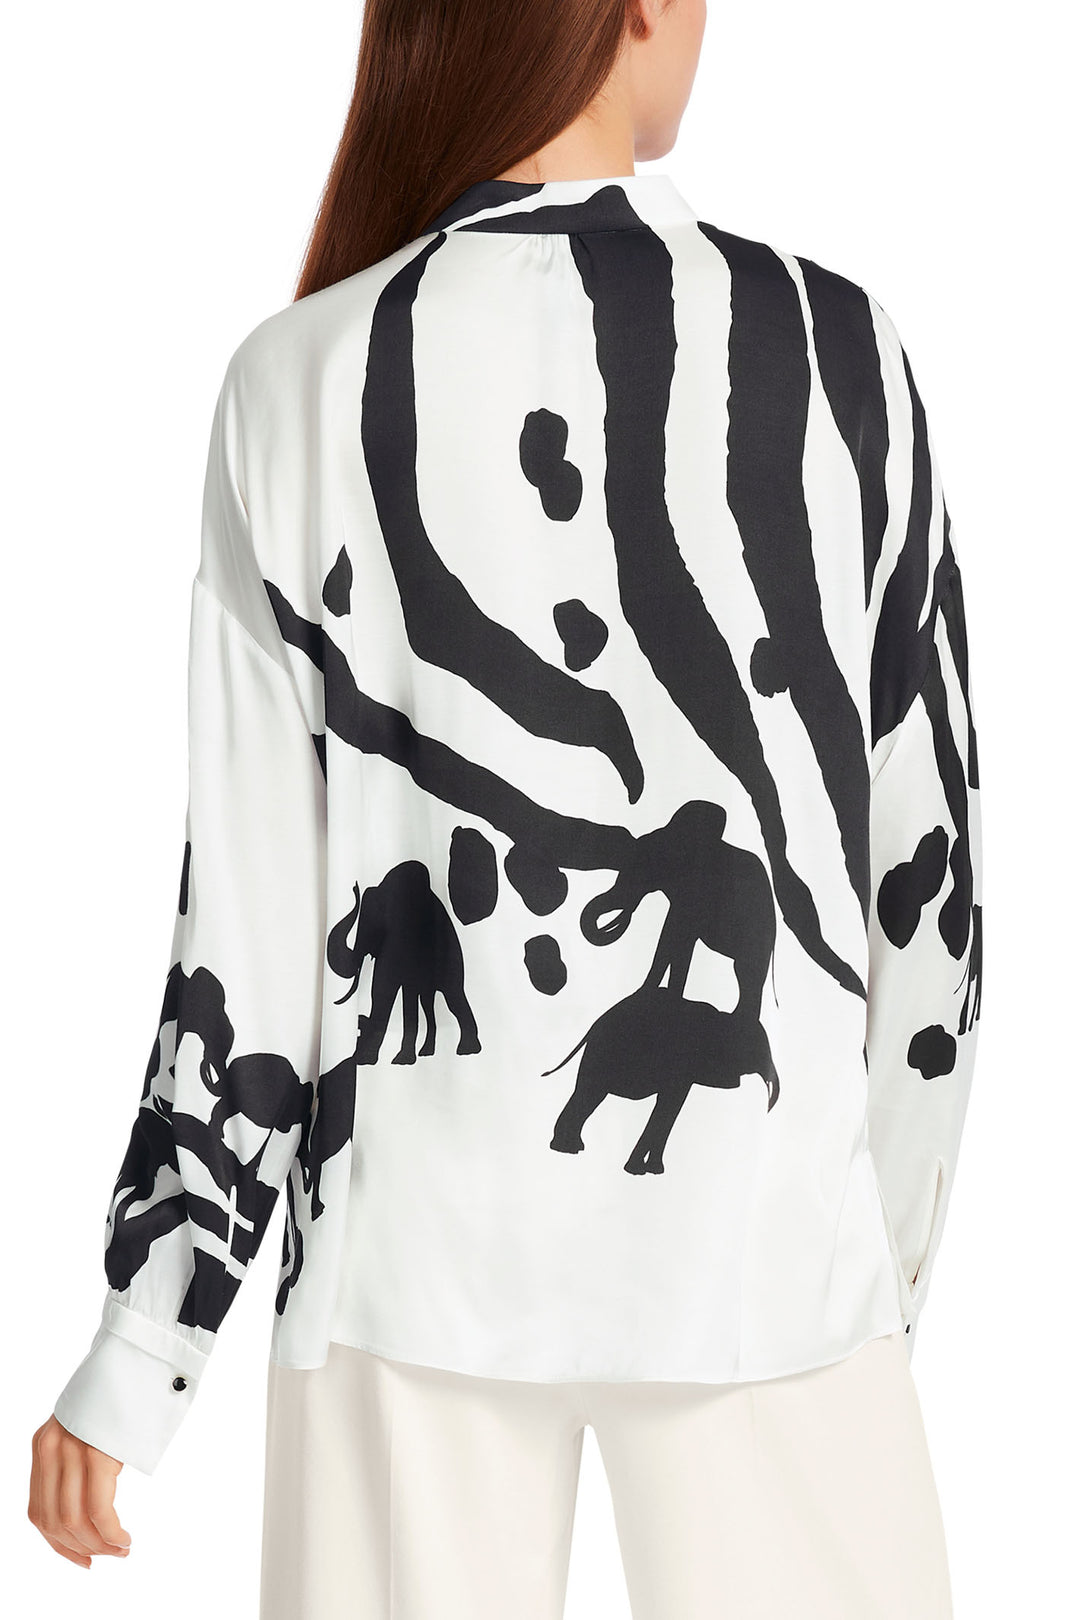 Marc Cain Collection WC 51.01 W14 190 White Black Elephant Print Blouse - Olivia Grace Fashion